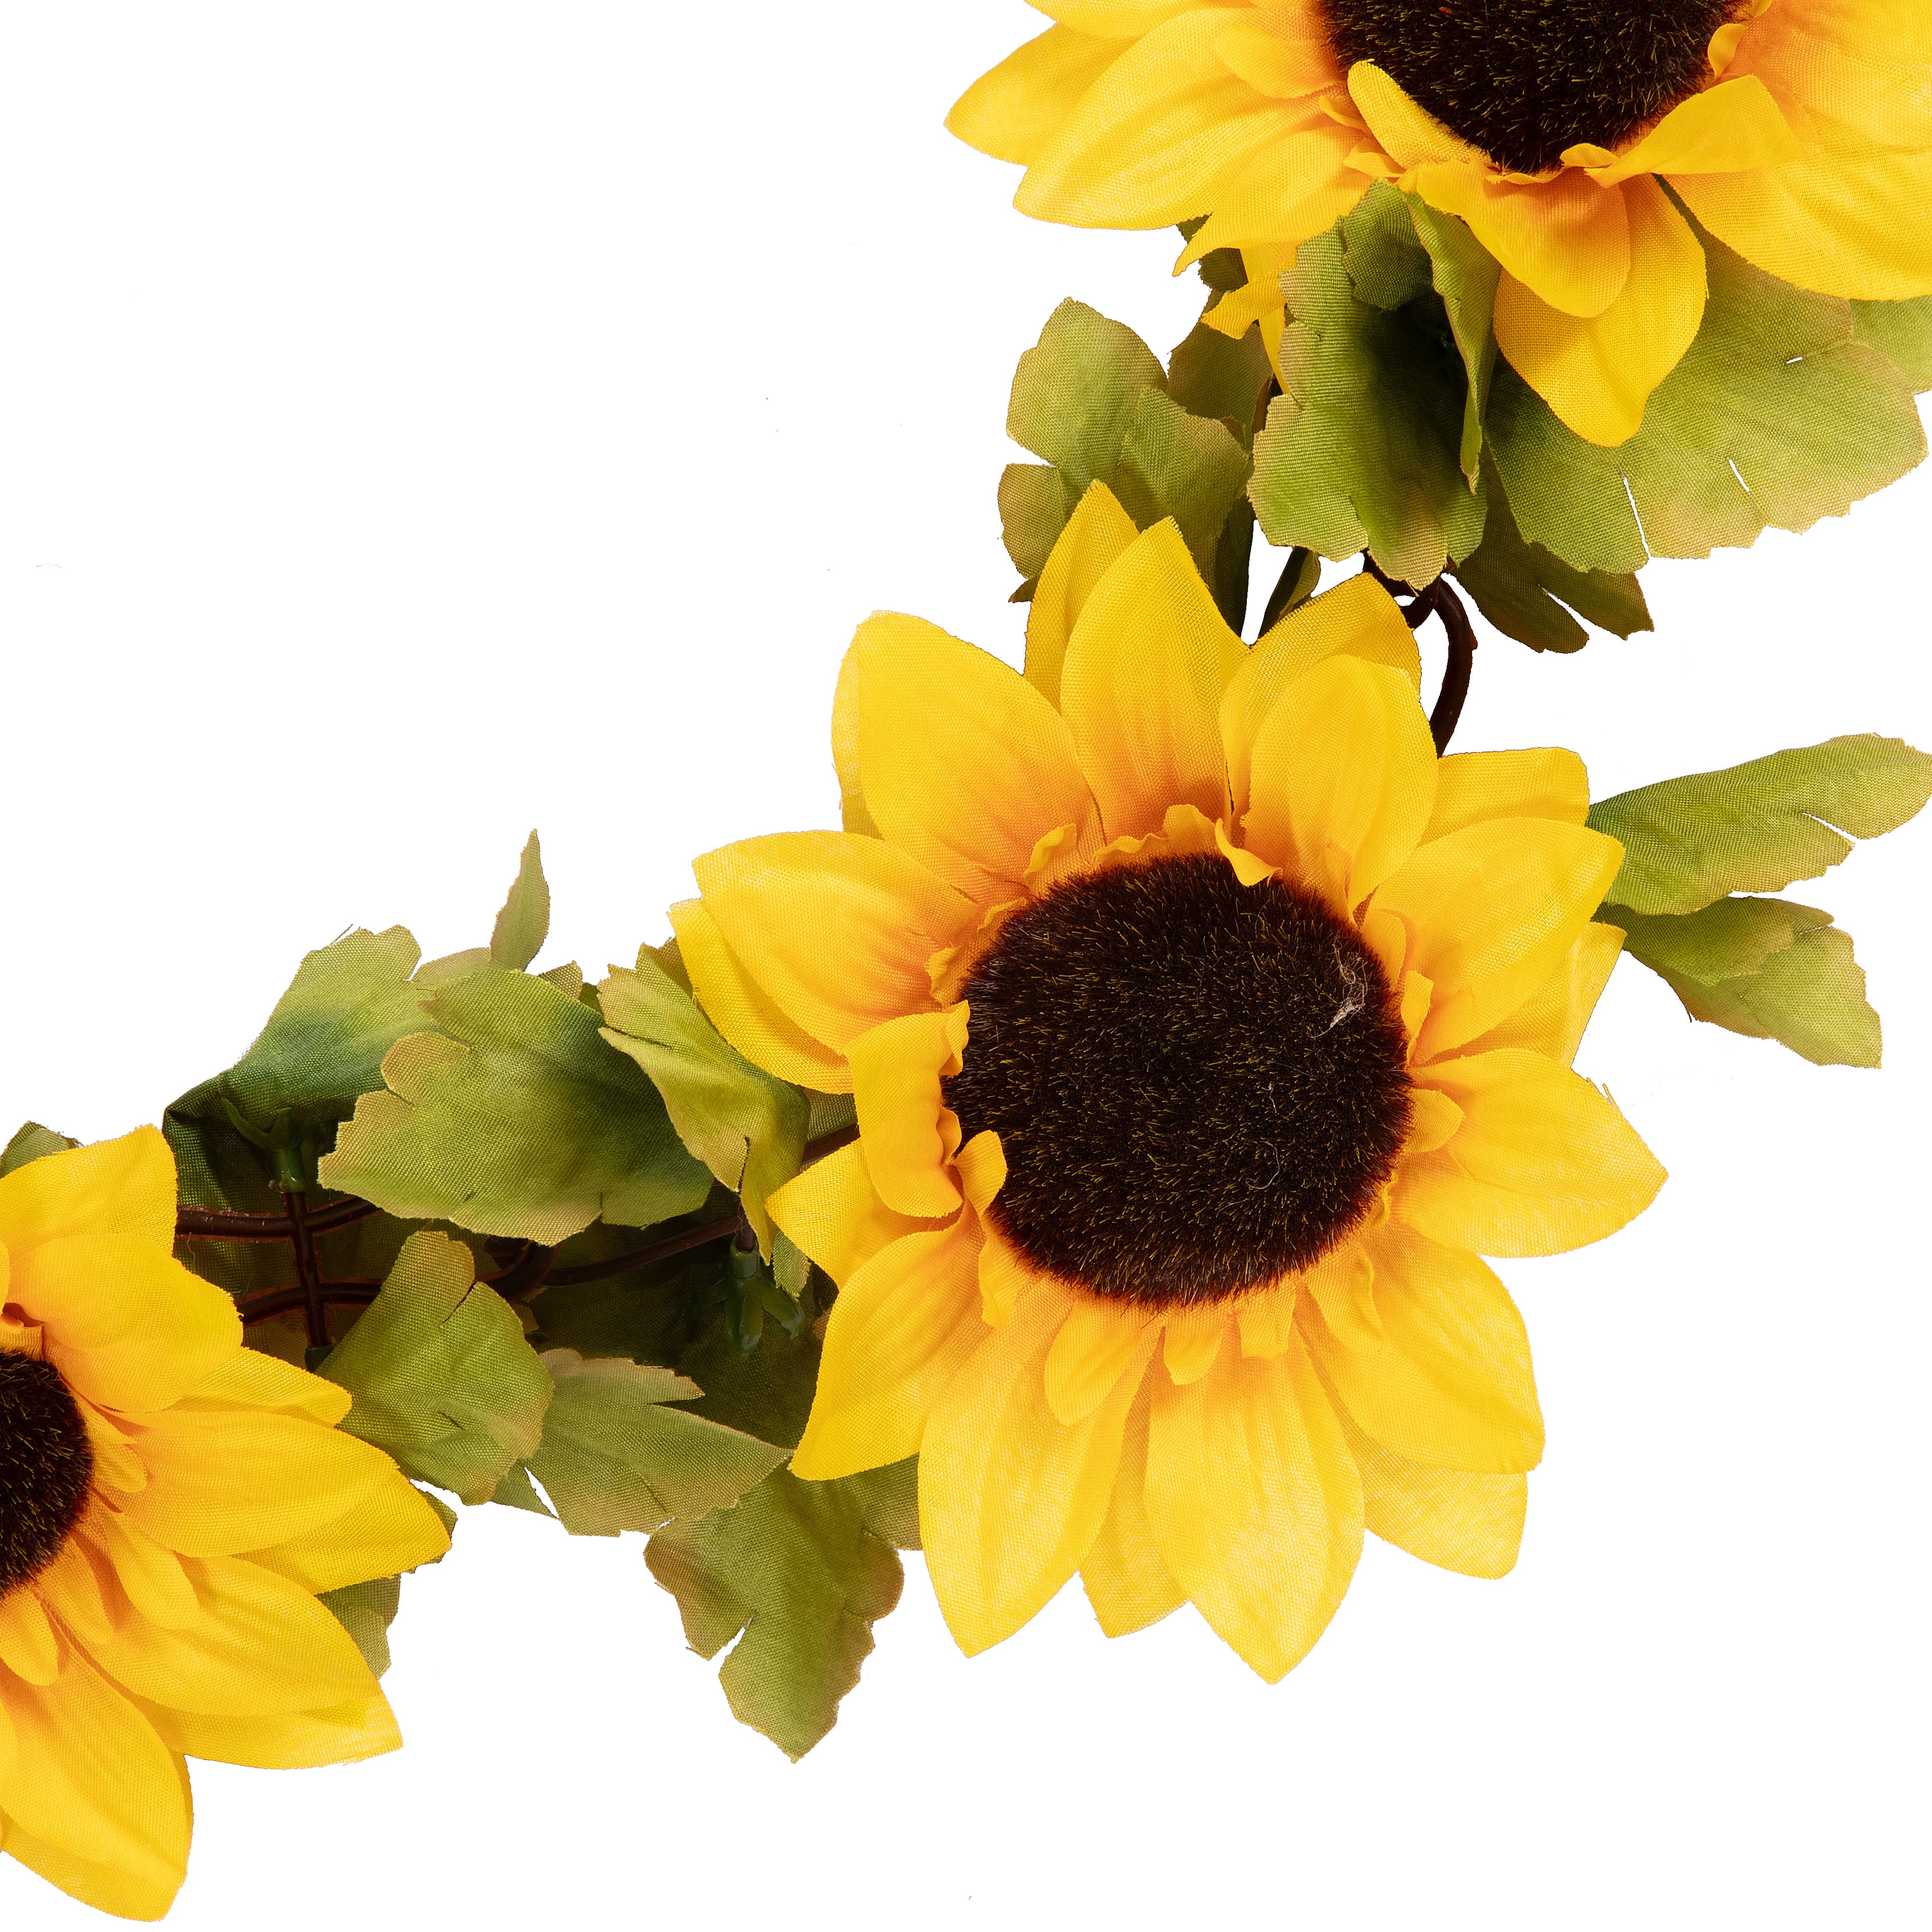 6ft. Gold Sunflower Chain Garland by Ashland&#xAE;